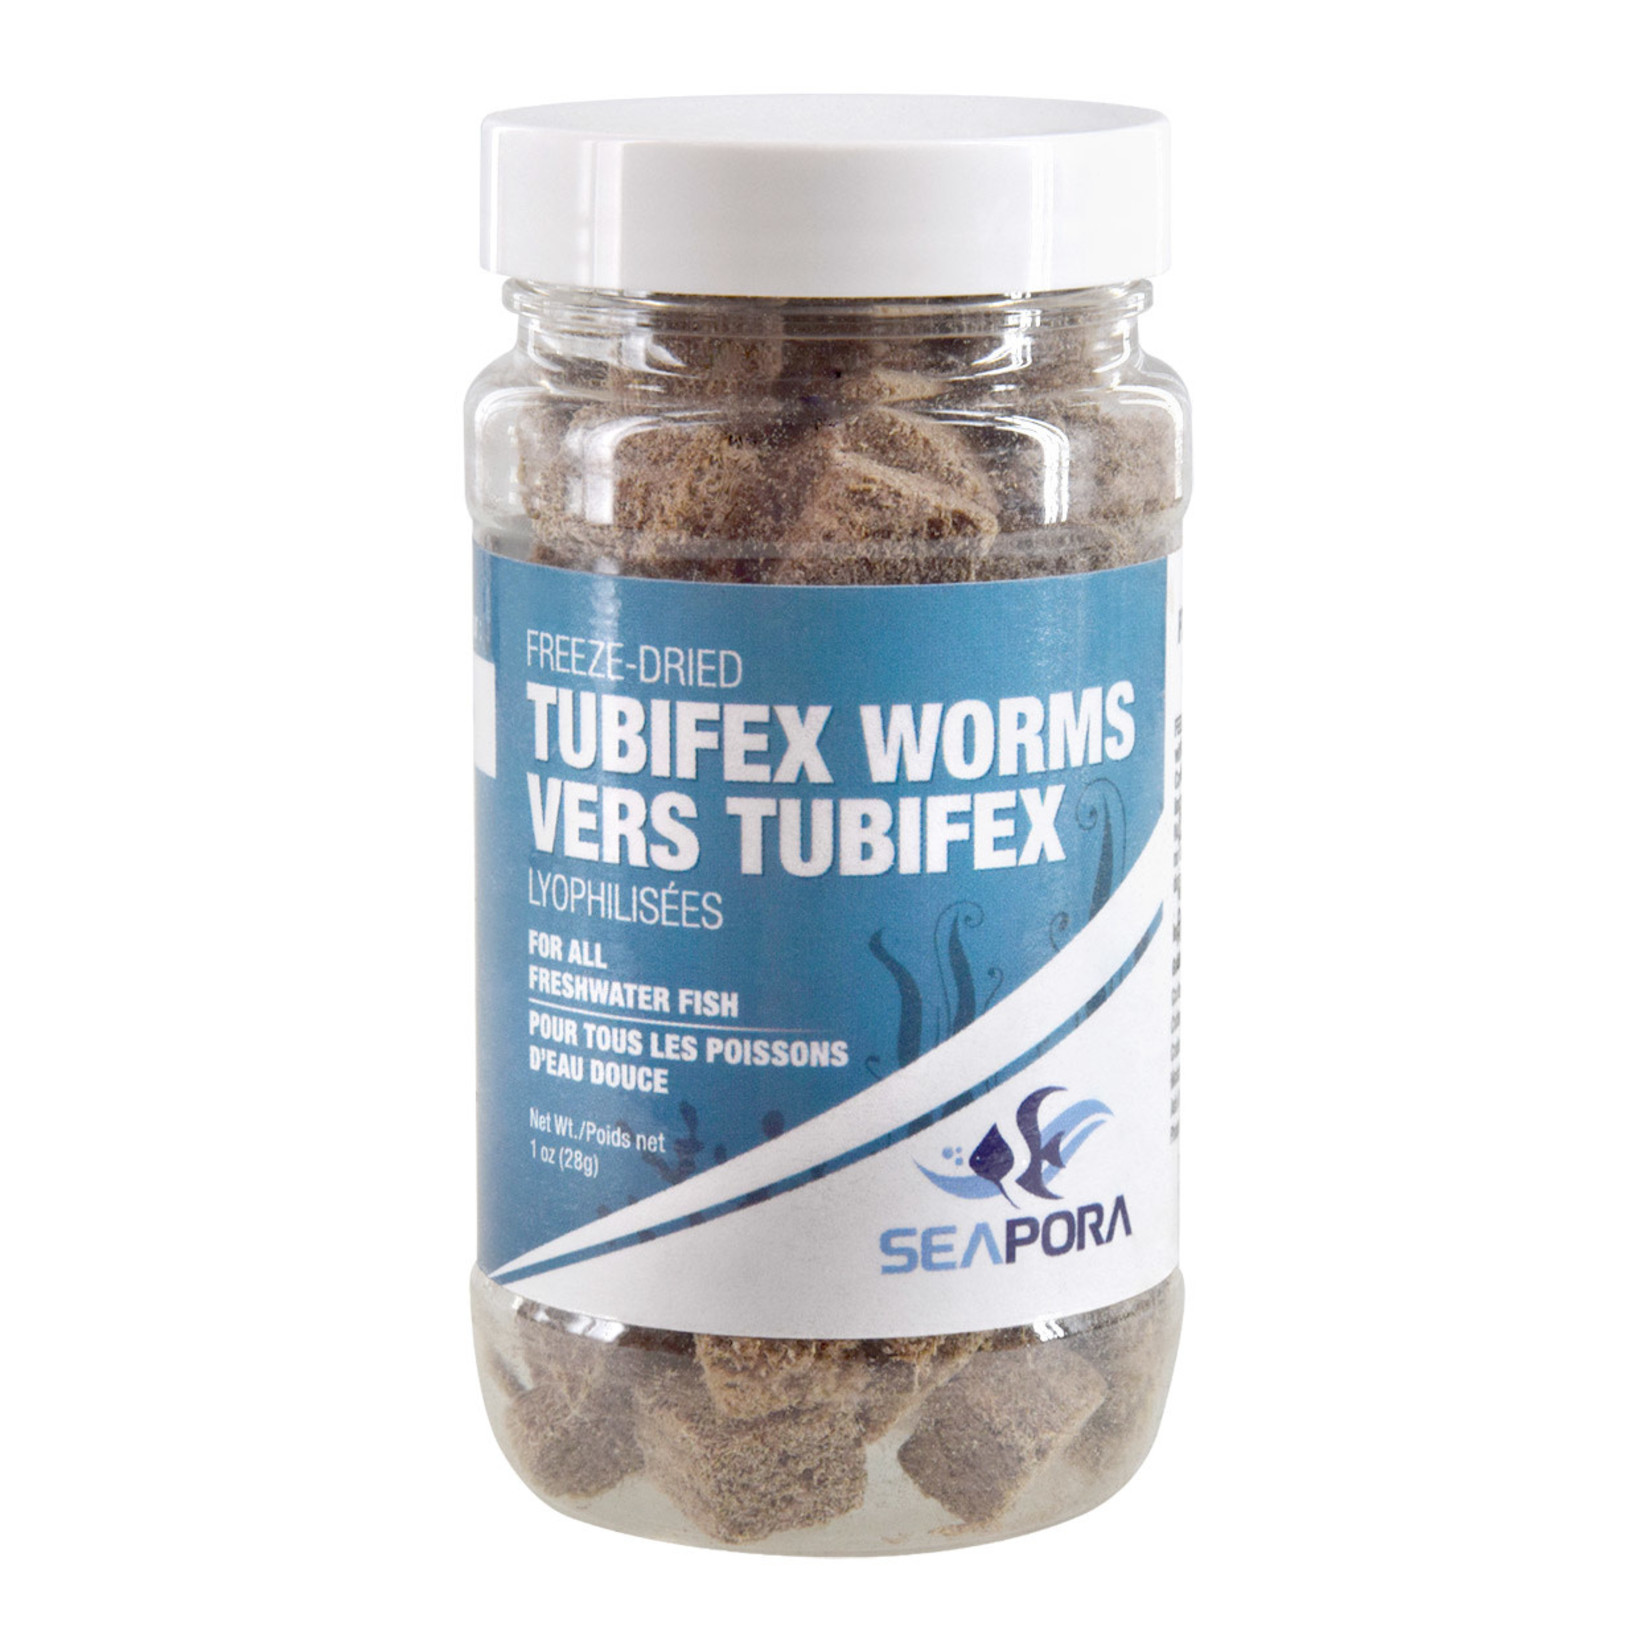 SEAPORA Seapora Freeze-Dried Tubifex Worms - 28 g